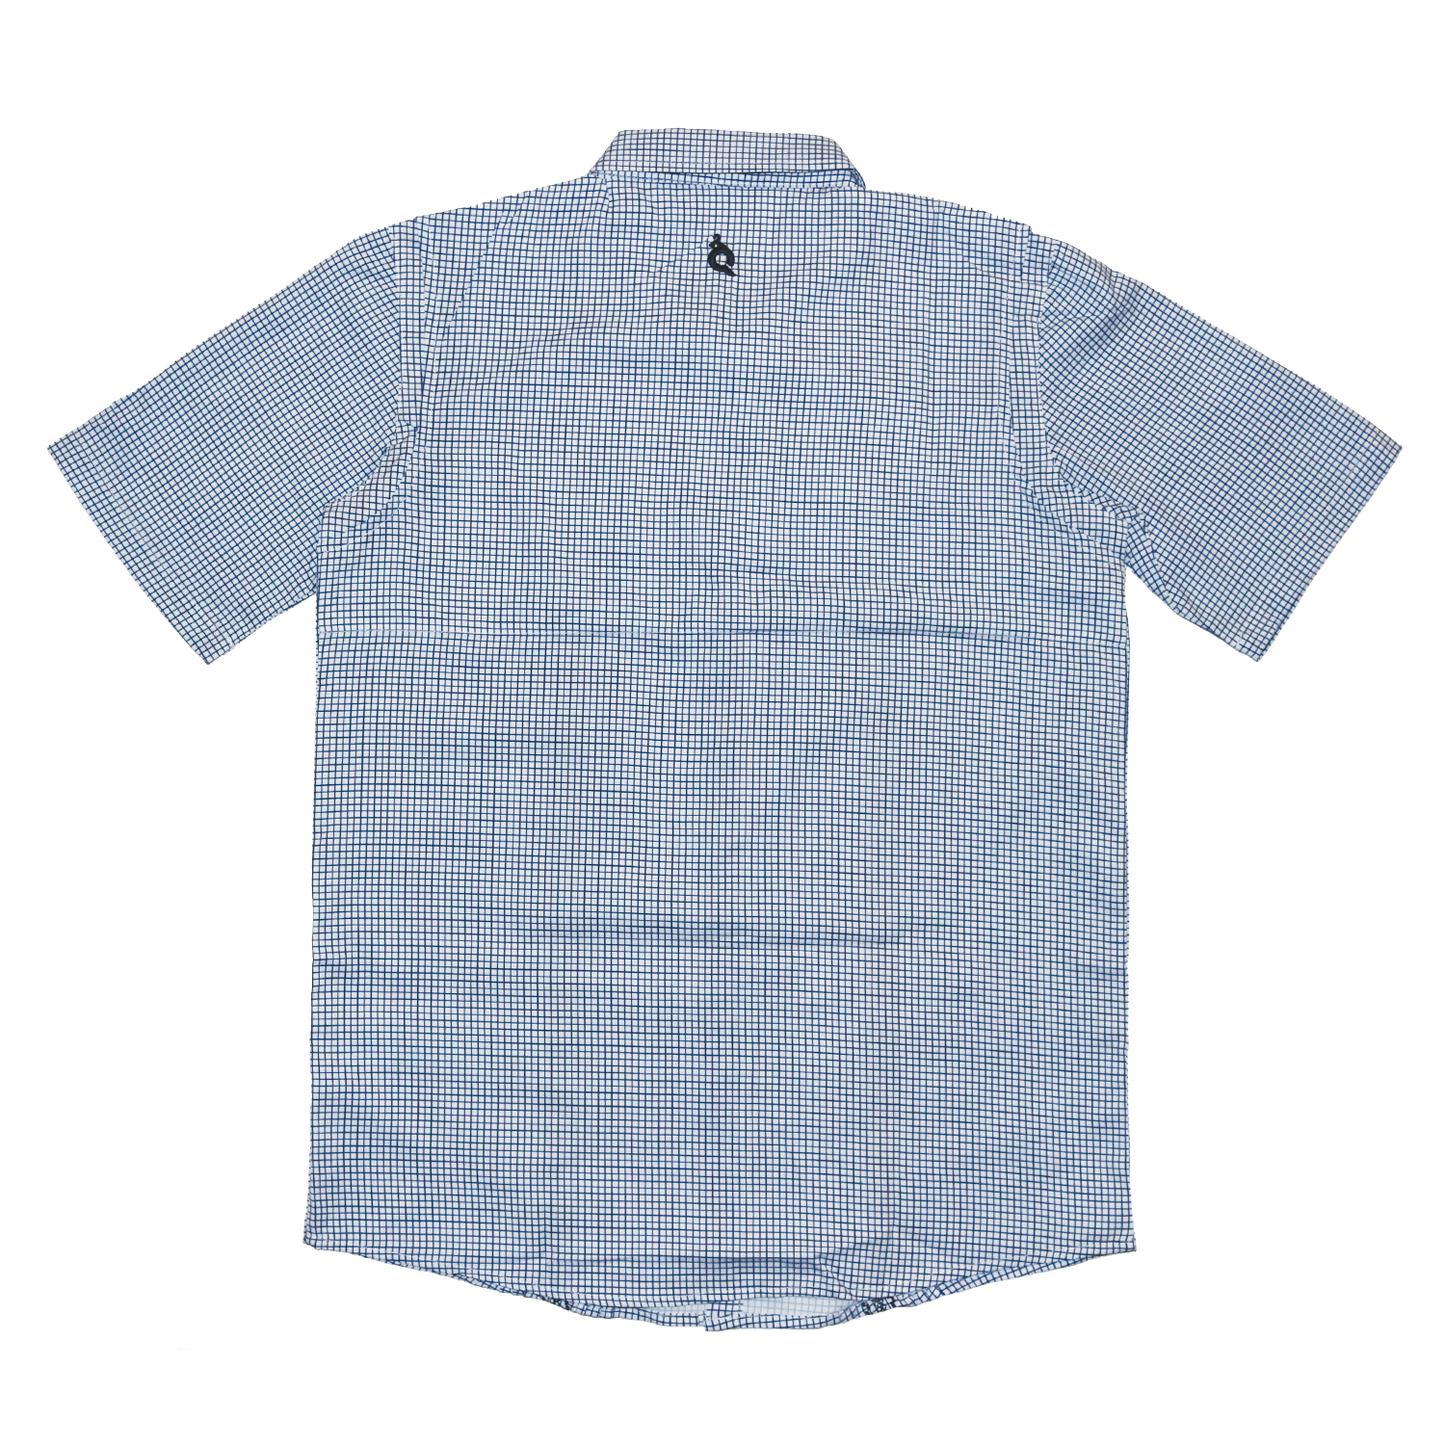 Gameday Guayabera - Navy Short Sleeve Shirt